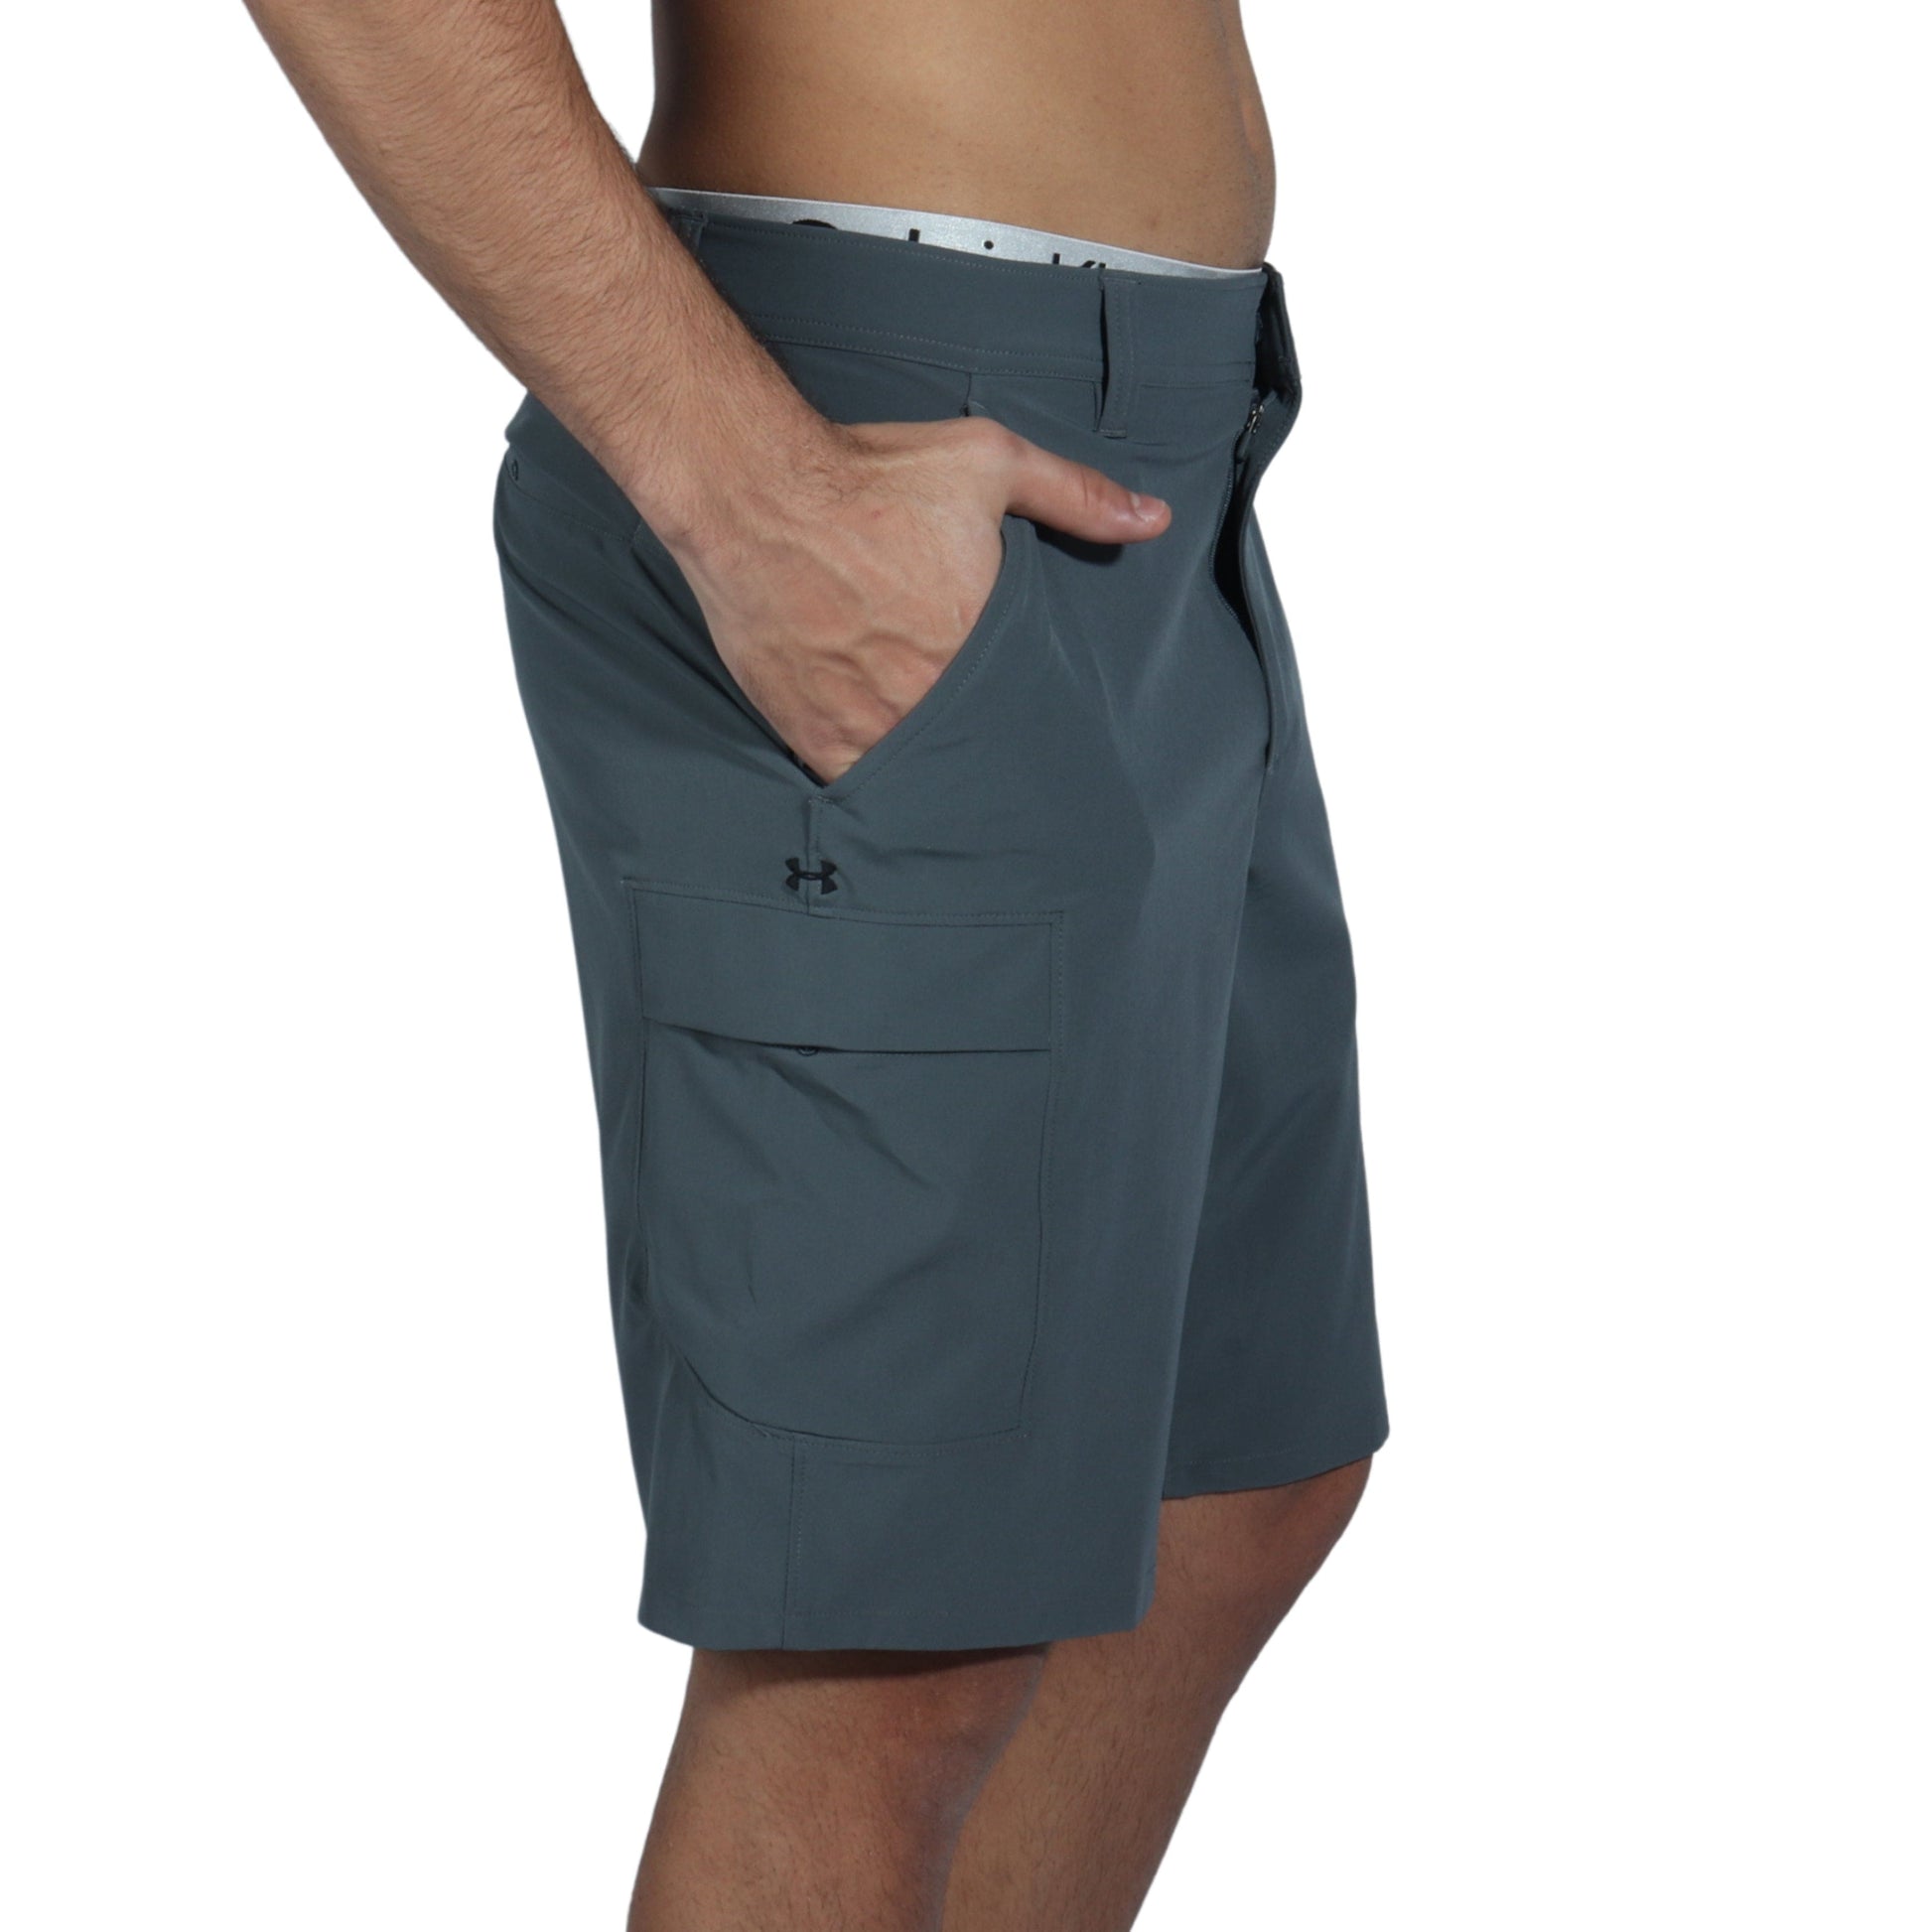 UNDER ARMOUR Mens Bottoms M / Grey UNDER ARMOUR - Zipper Front Short